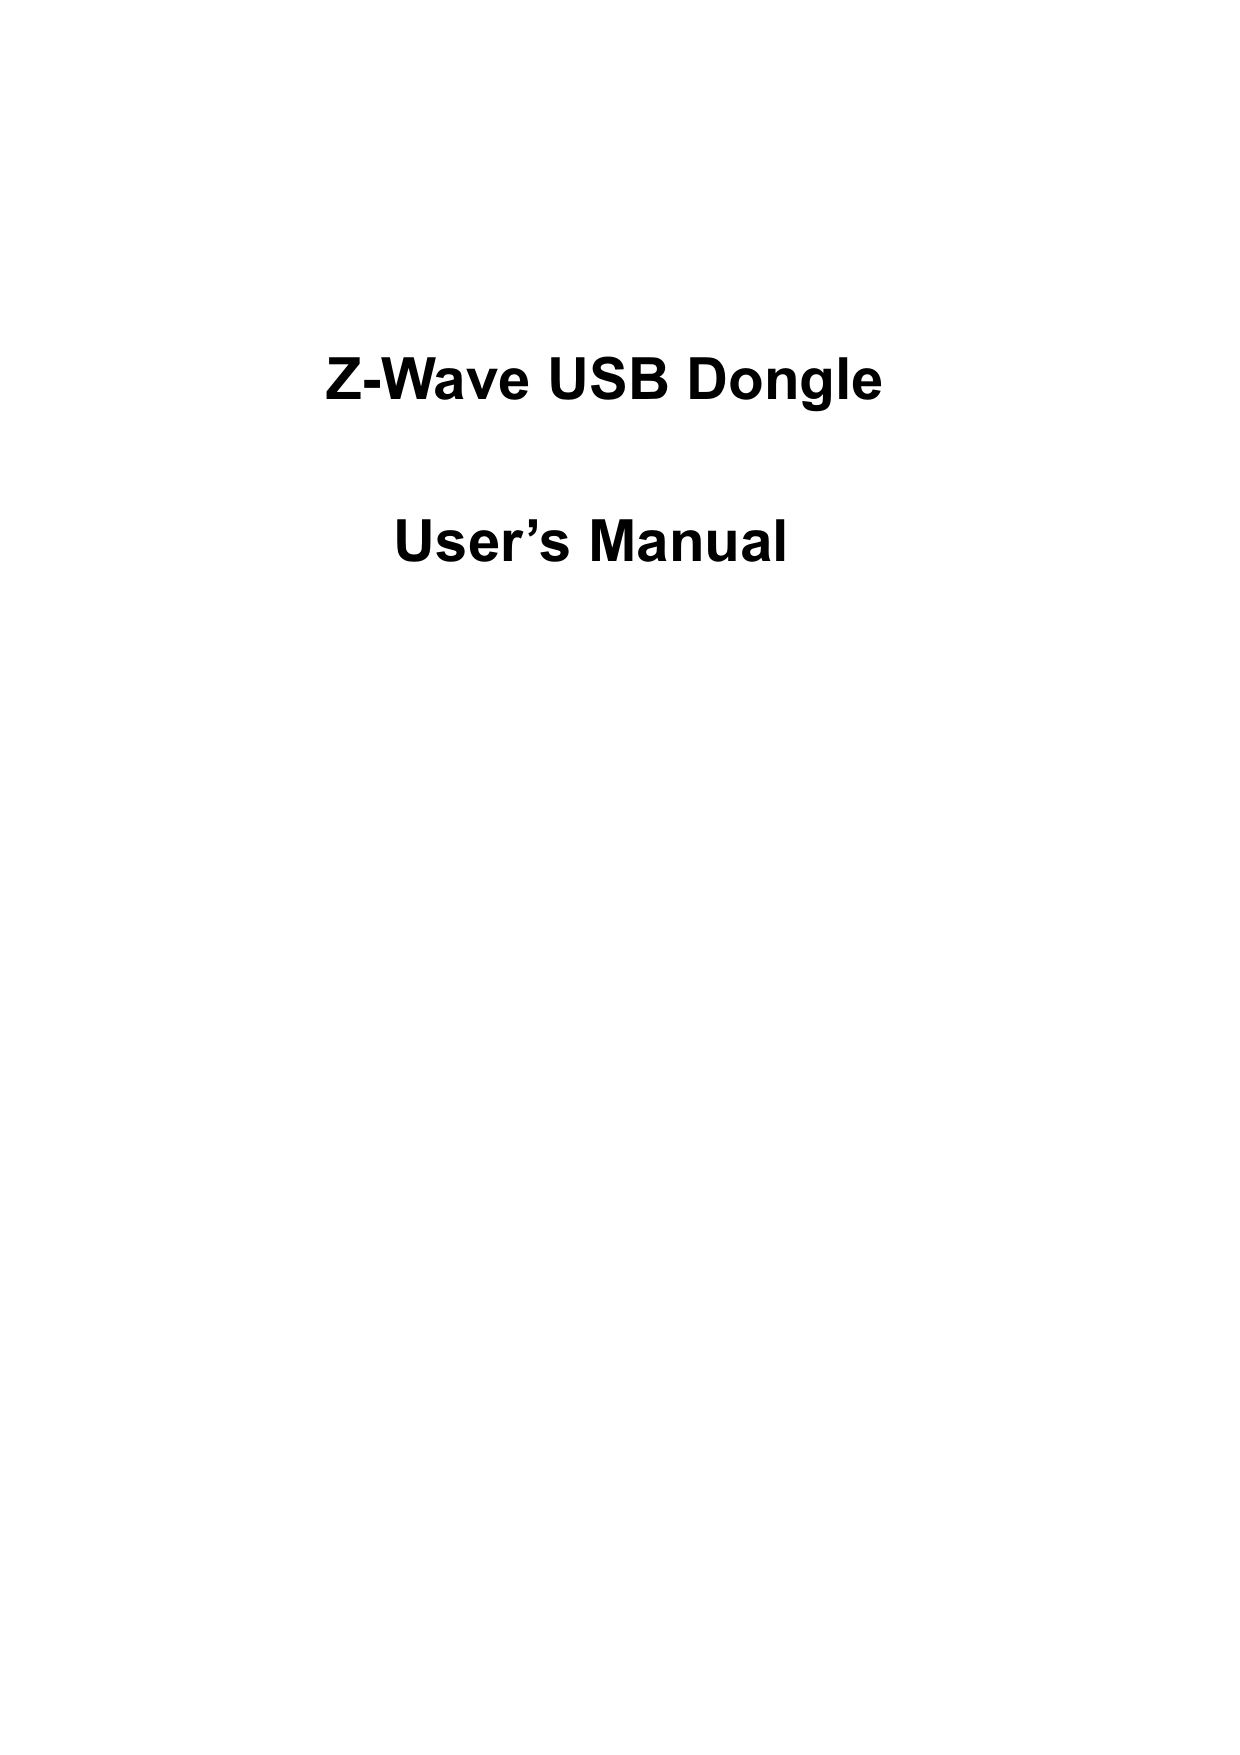 Z-Wave USB Dongle User’s Manual 